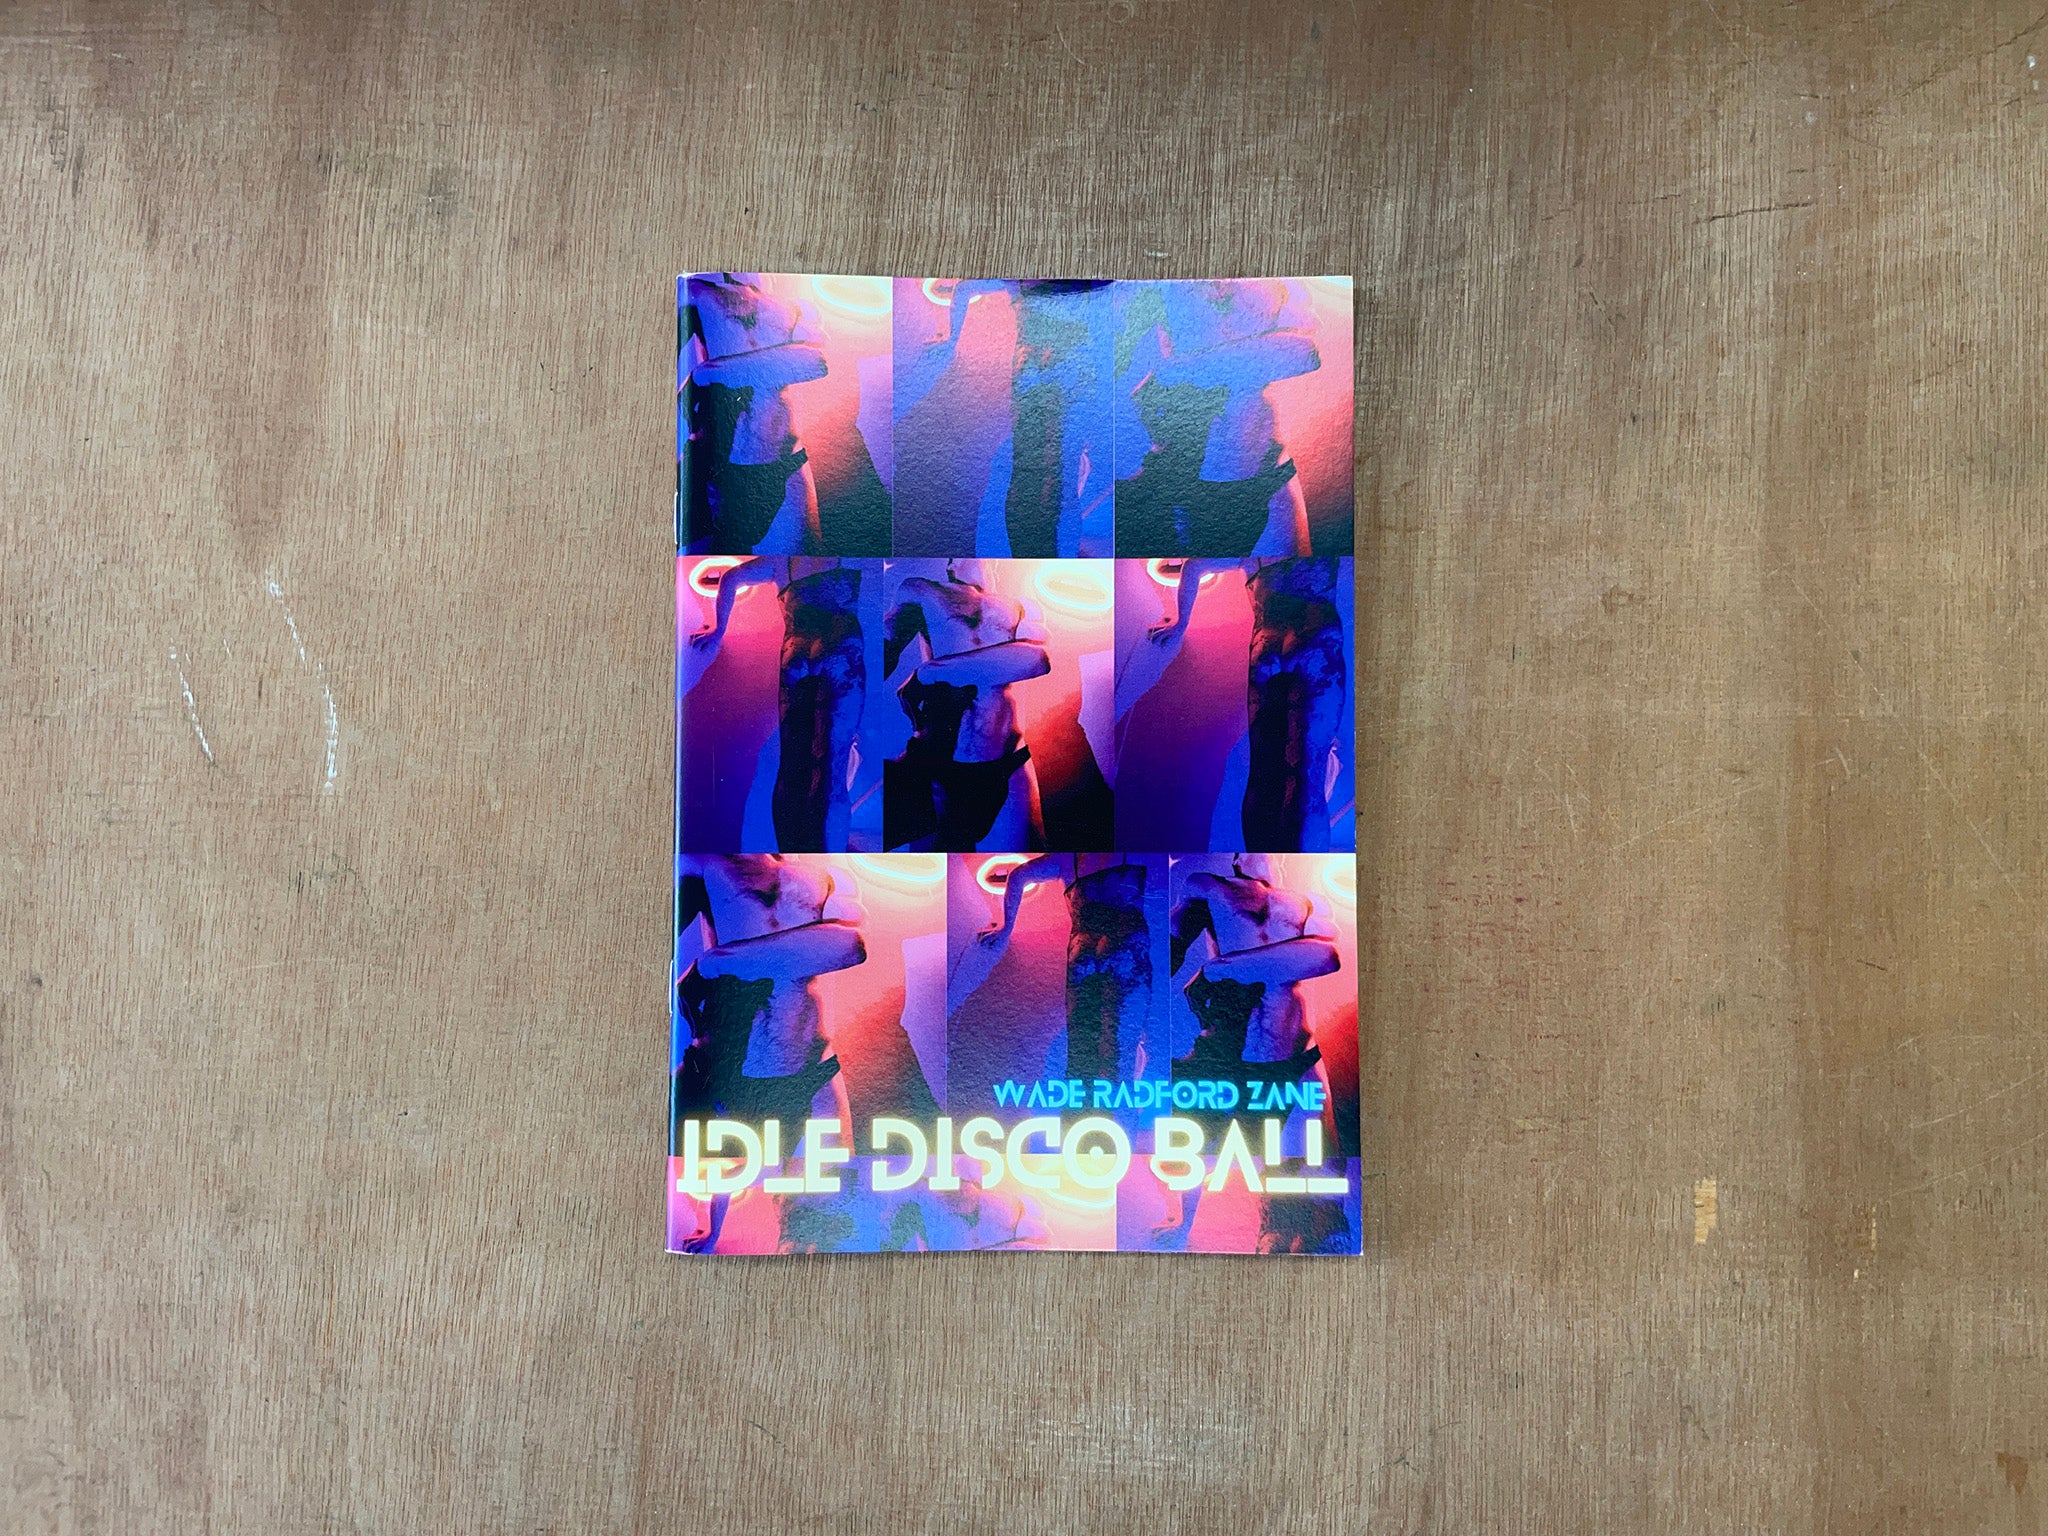 IDLE DISCO BALL by Wade Radford-Zane